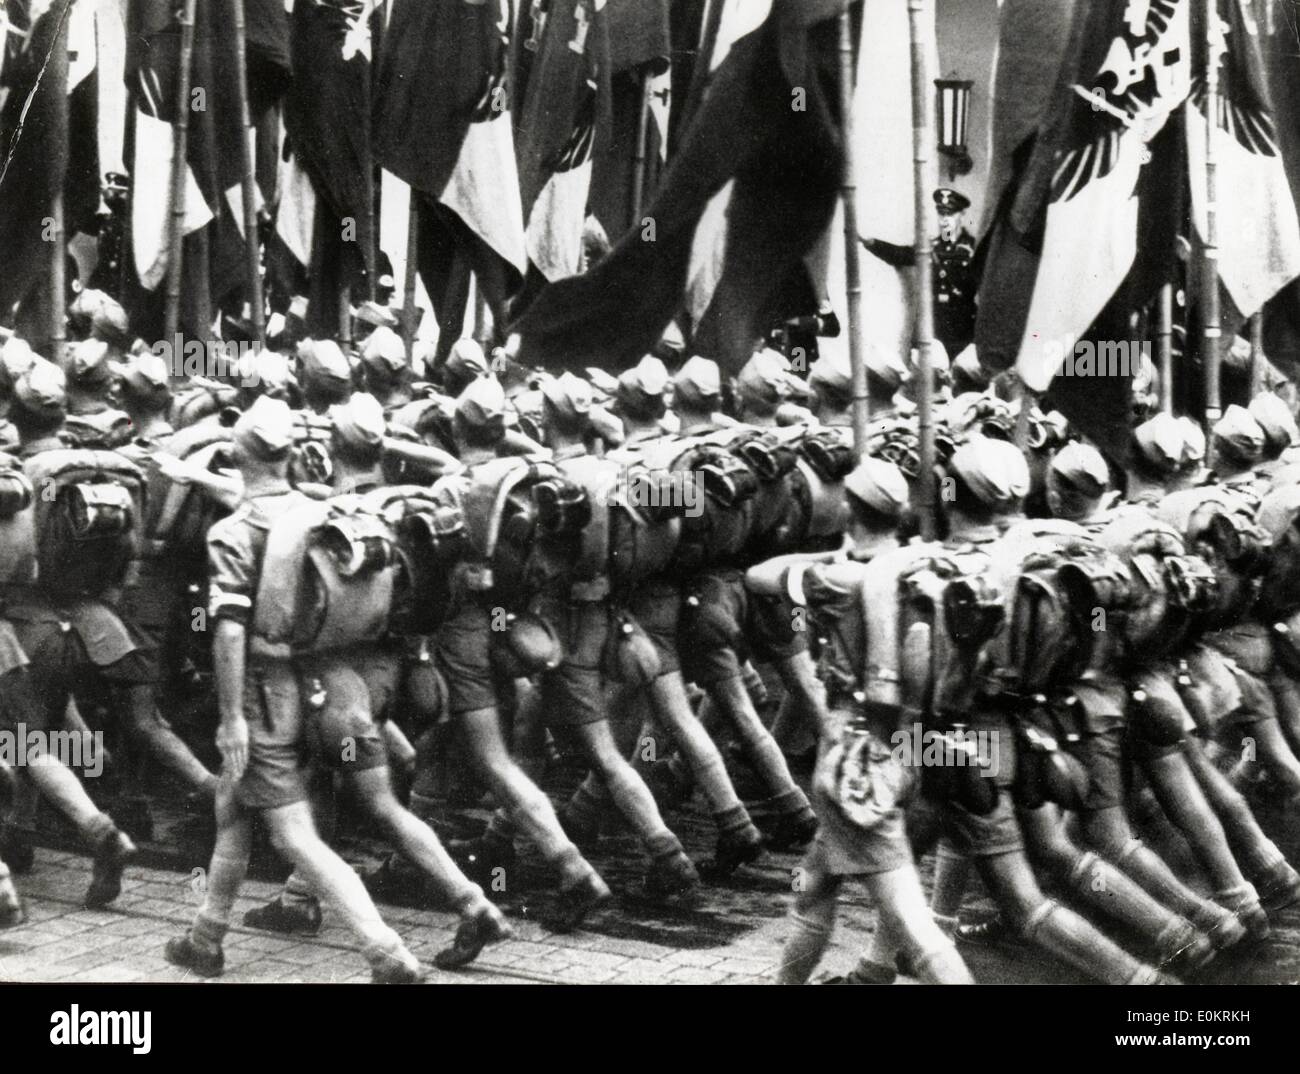 Jan. 01, 1940 - Berlin, Germany - File Photo: circa 1930s-1940s. The Nazi Youth Movement. Stock Photo